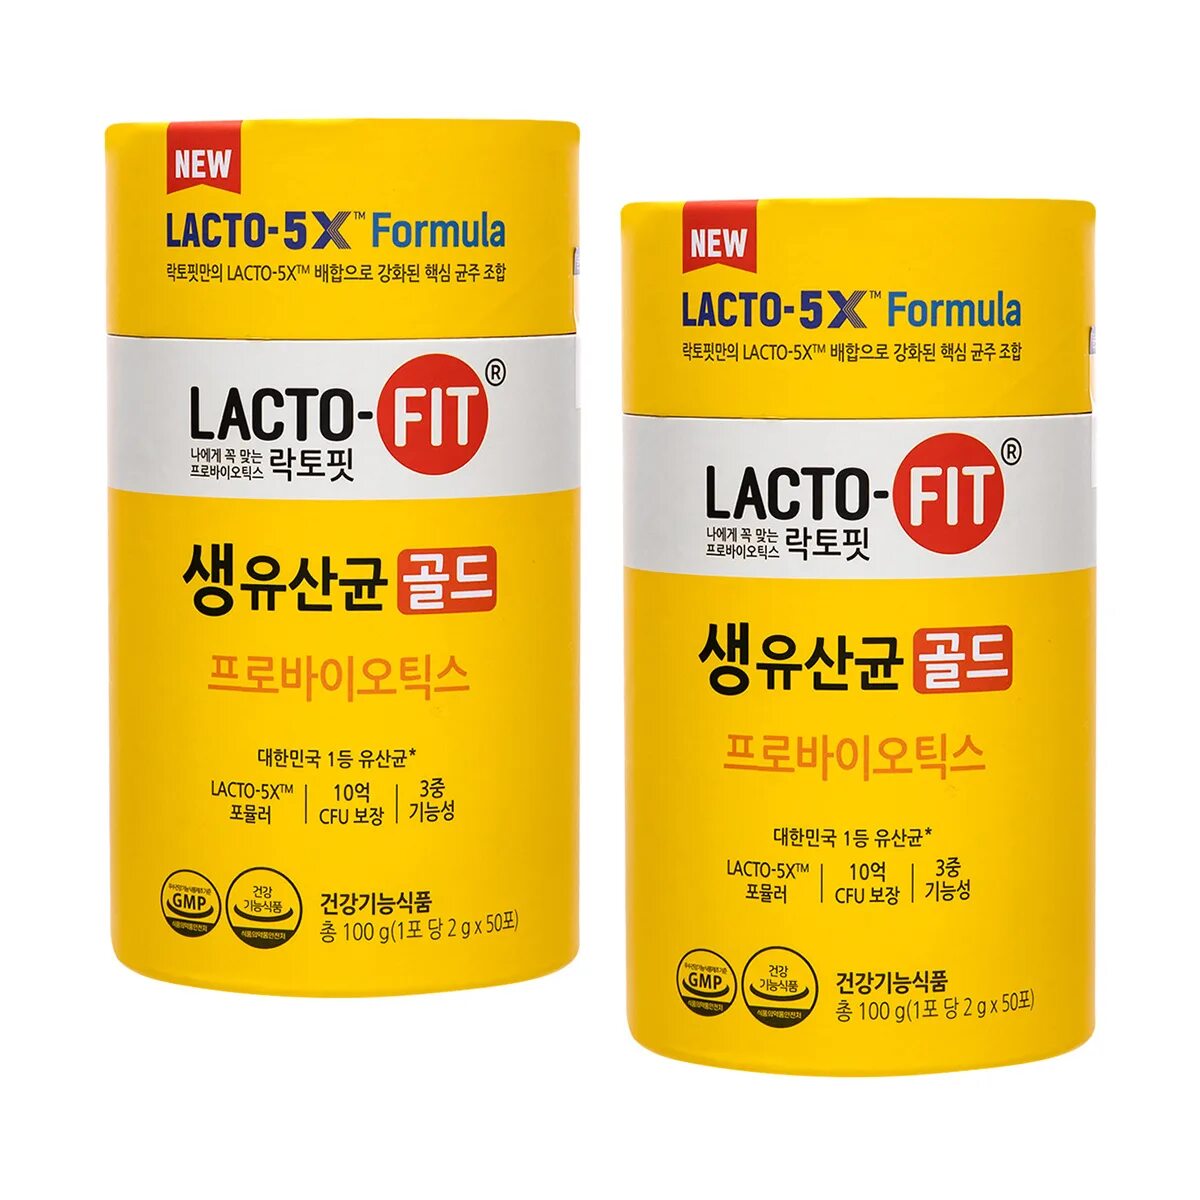 Immunalol inter natural. Lacto-Fit Gold,. Саше lacto-Fit Gold «формула х5». Lacto Fit Корея. Lactofit корейский пробиотик.